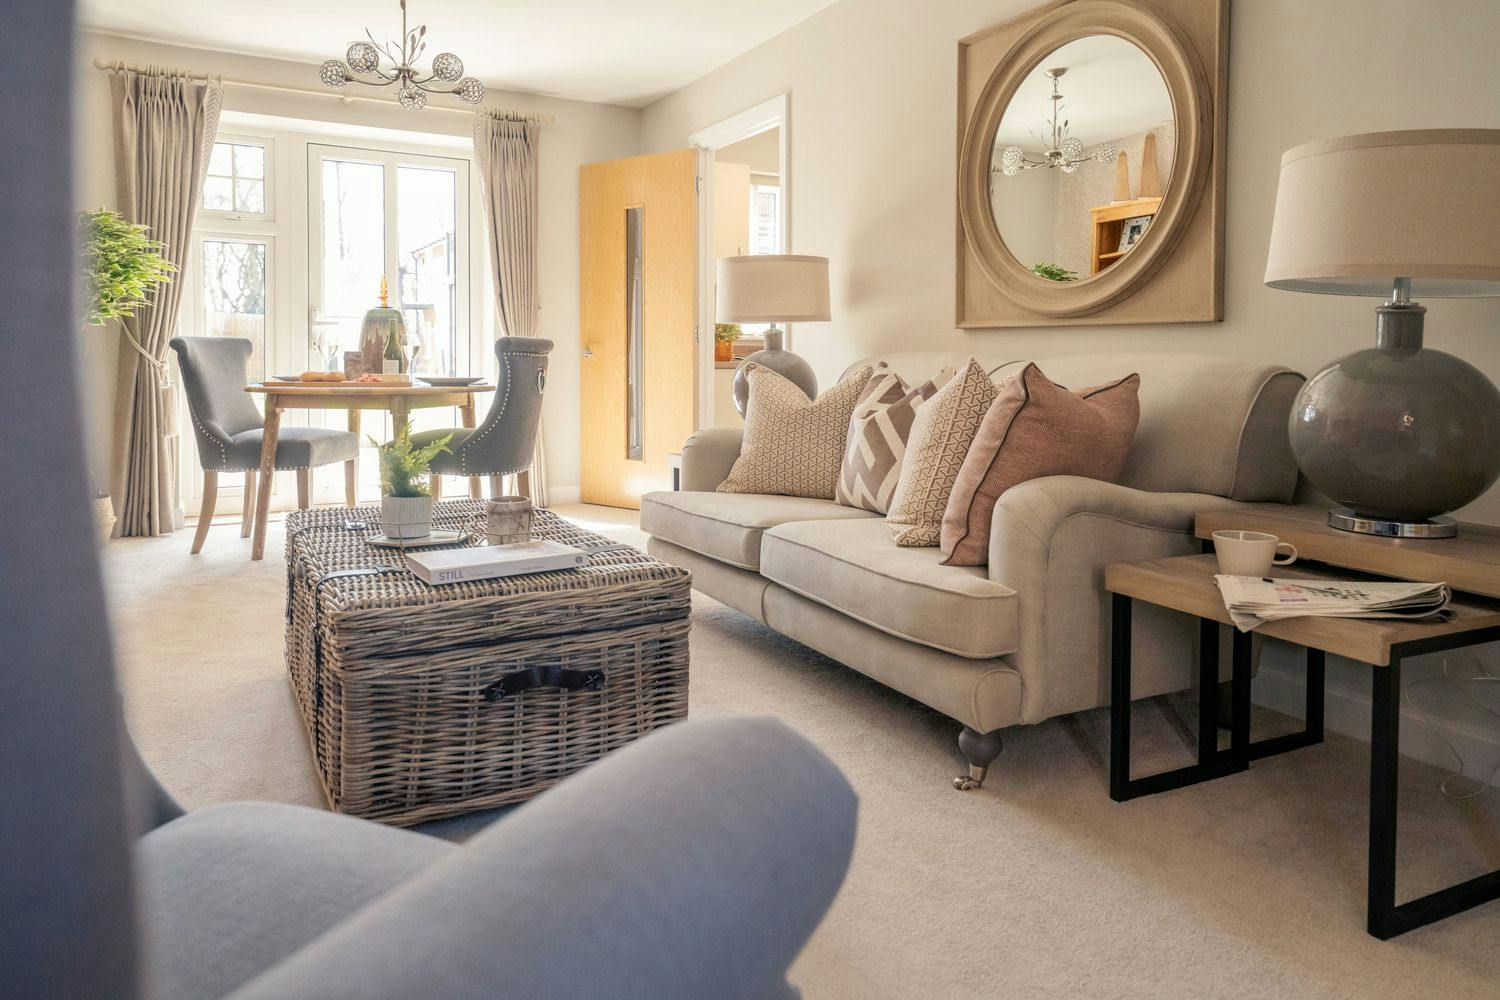 Living Room at Goodes Court Retirement Development in Royston, North Hertfordshire